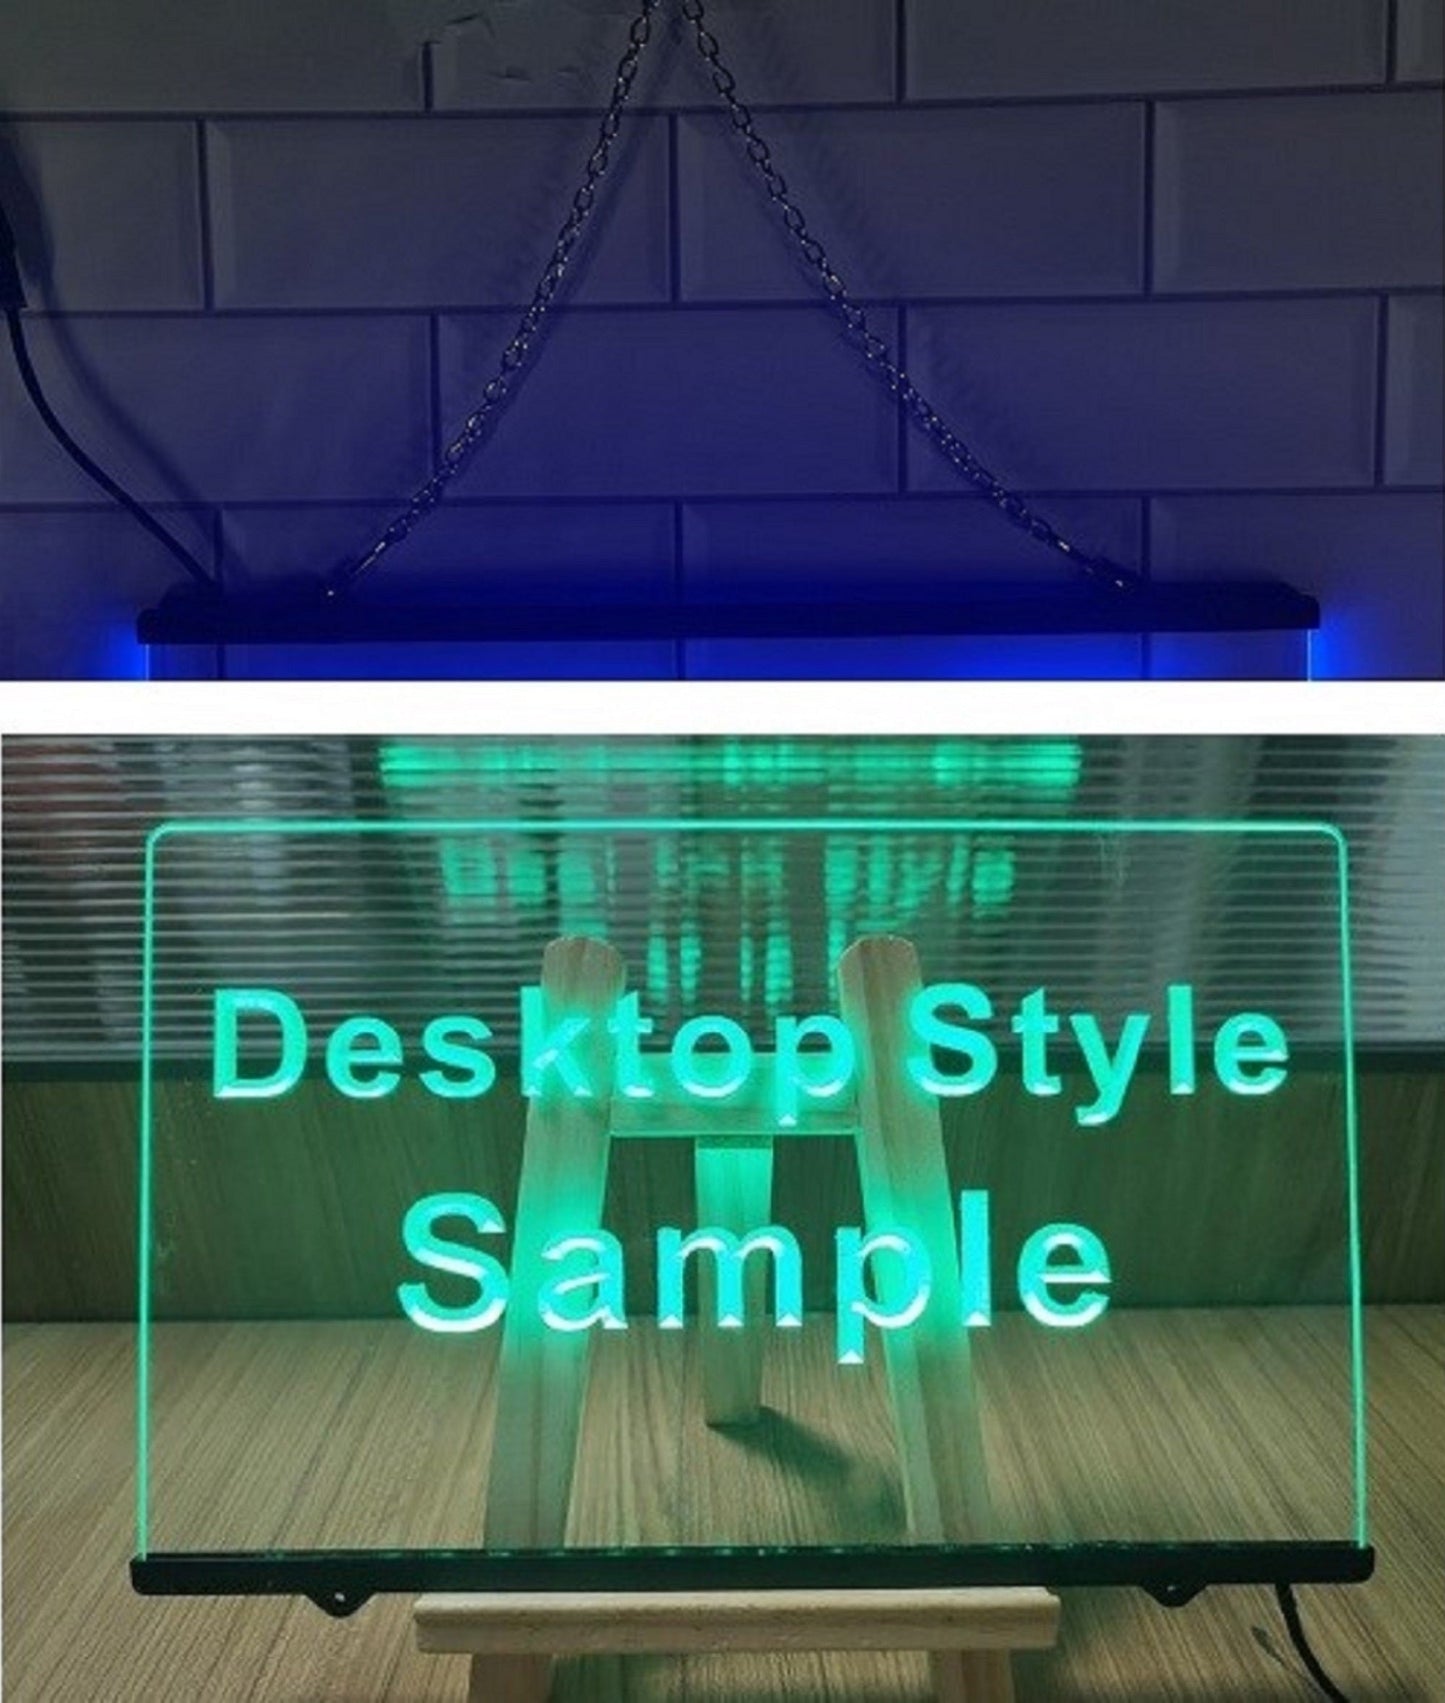 Neon Sign Dual Color Ghostbusters Home Studio Wall Desk Top Decor